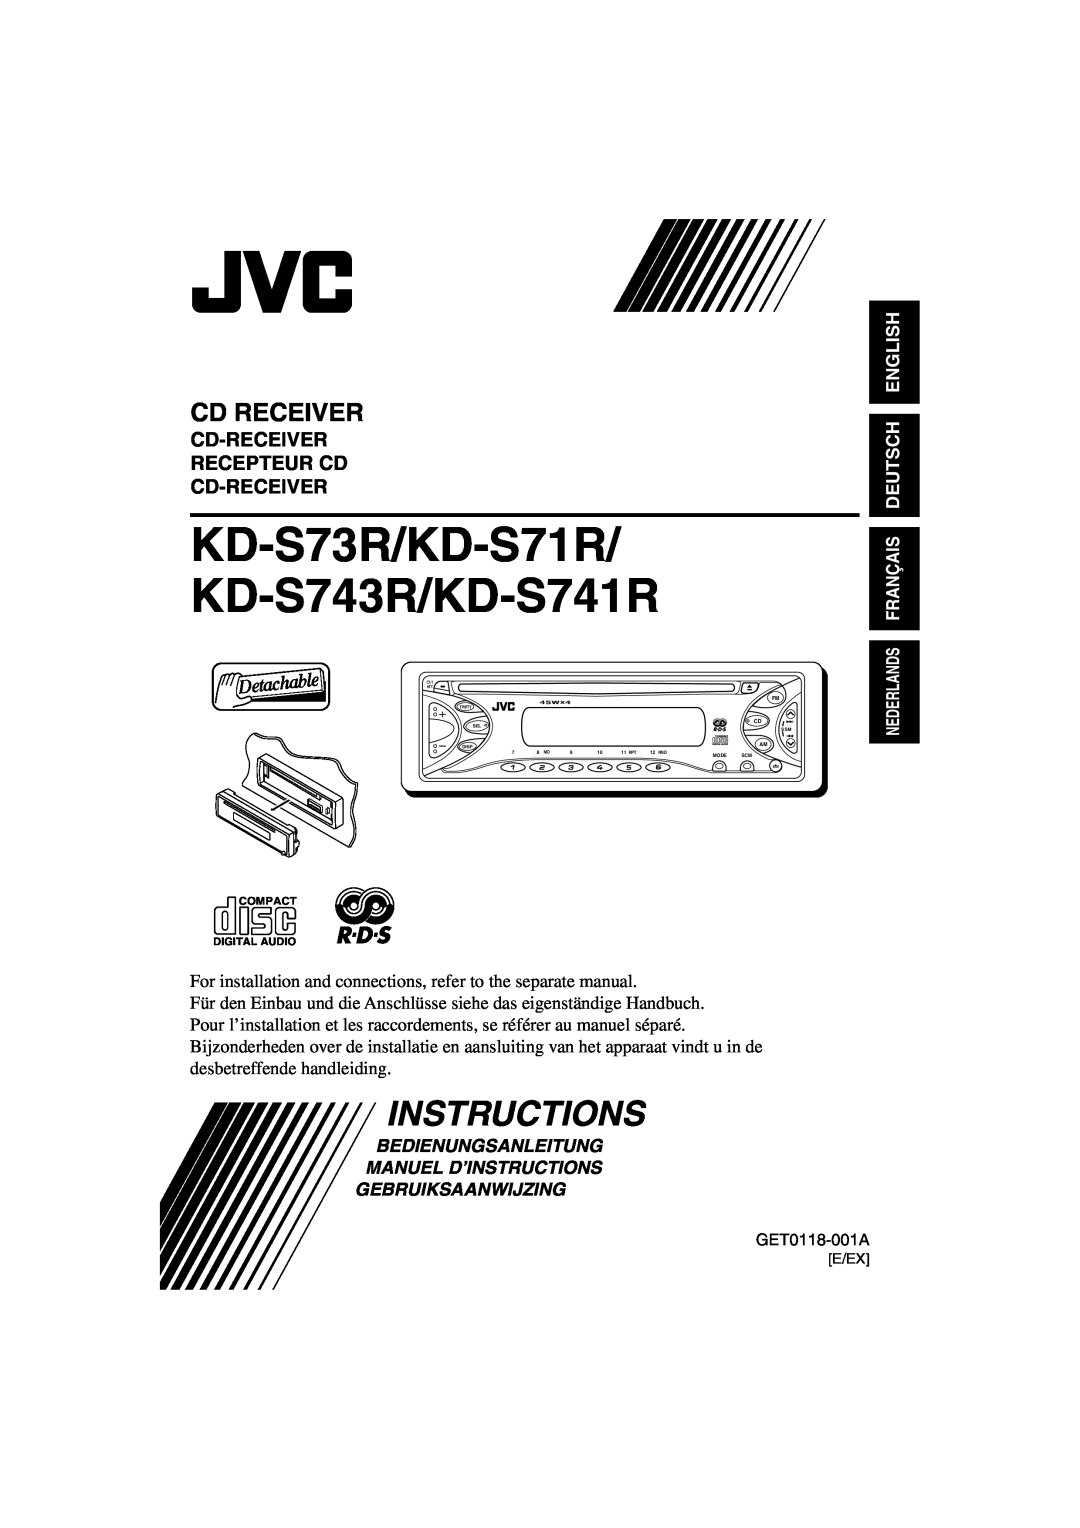 JVC manual Cd Receiver, Cd-Receiver Recepteur Cd Cd-Receiver, English Deutsch, KD-S73R/KD-S71R/ KD-S743R/KD-S741R 